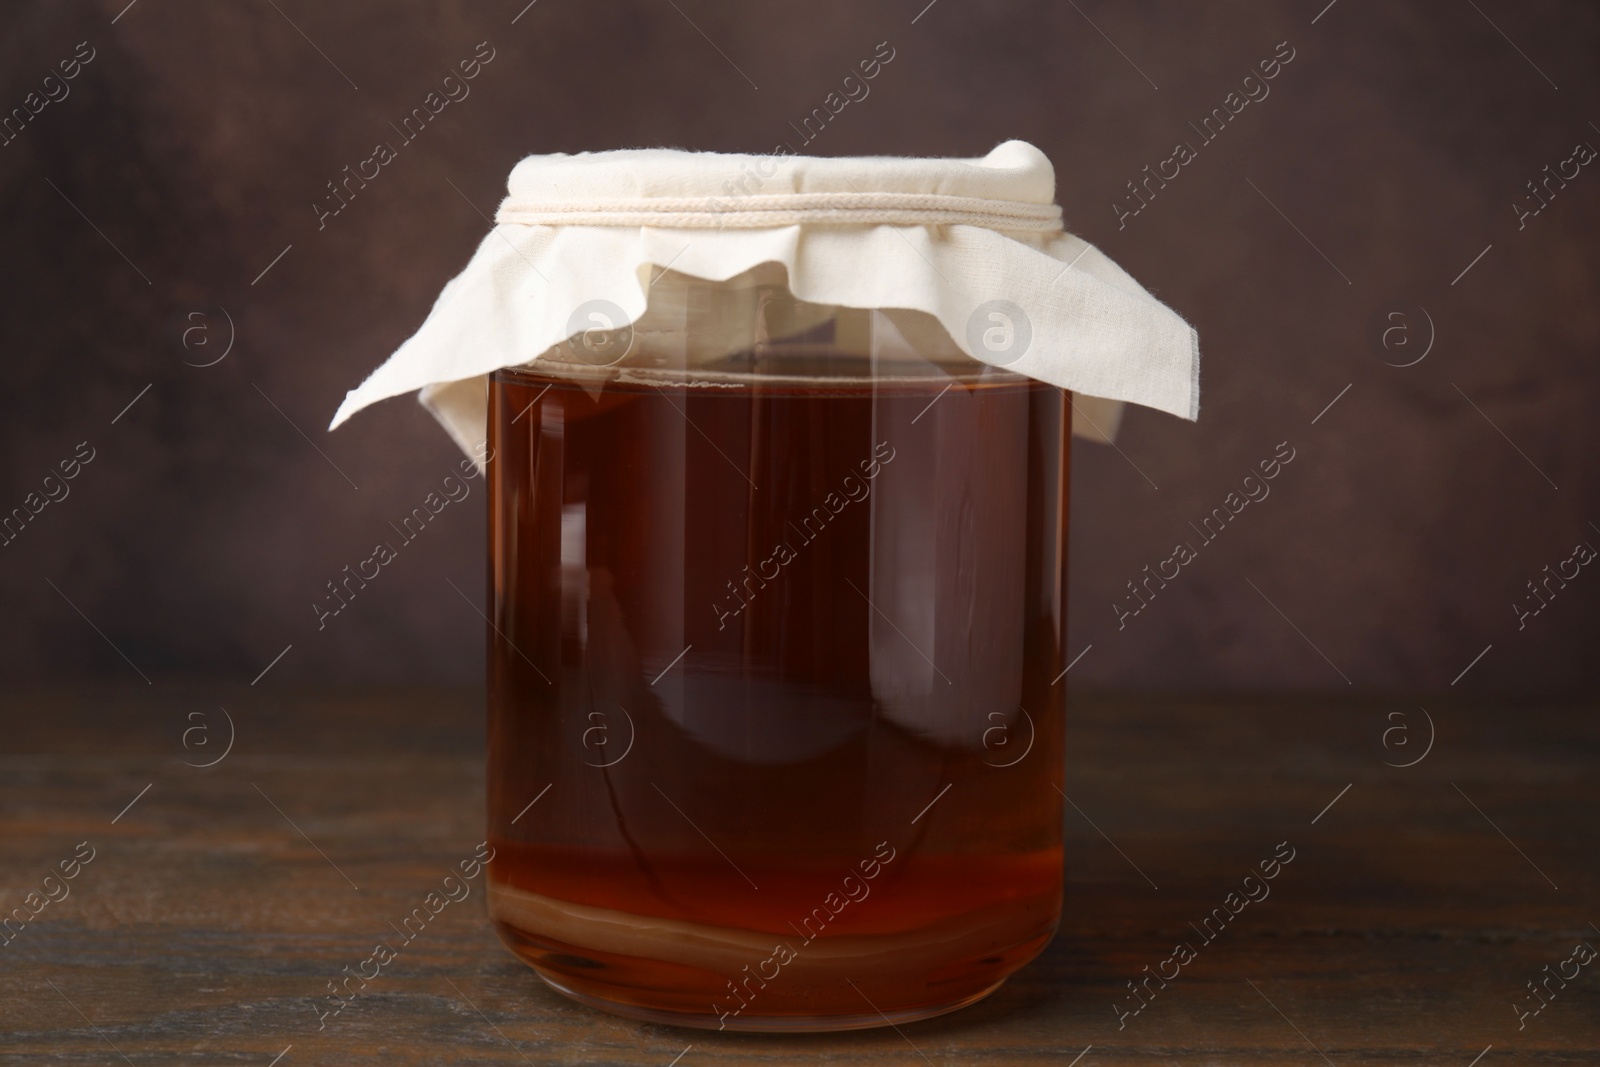 Photo of Tasty kombucha in glass jar on wooden table